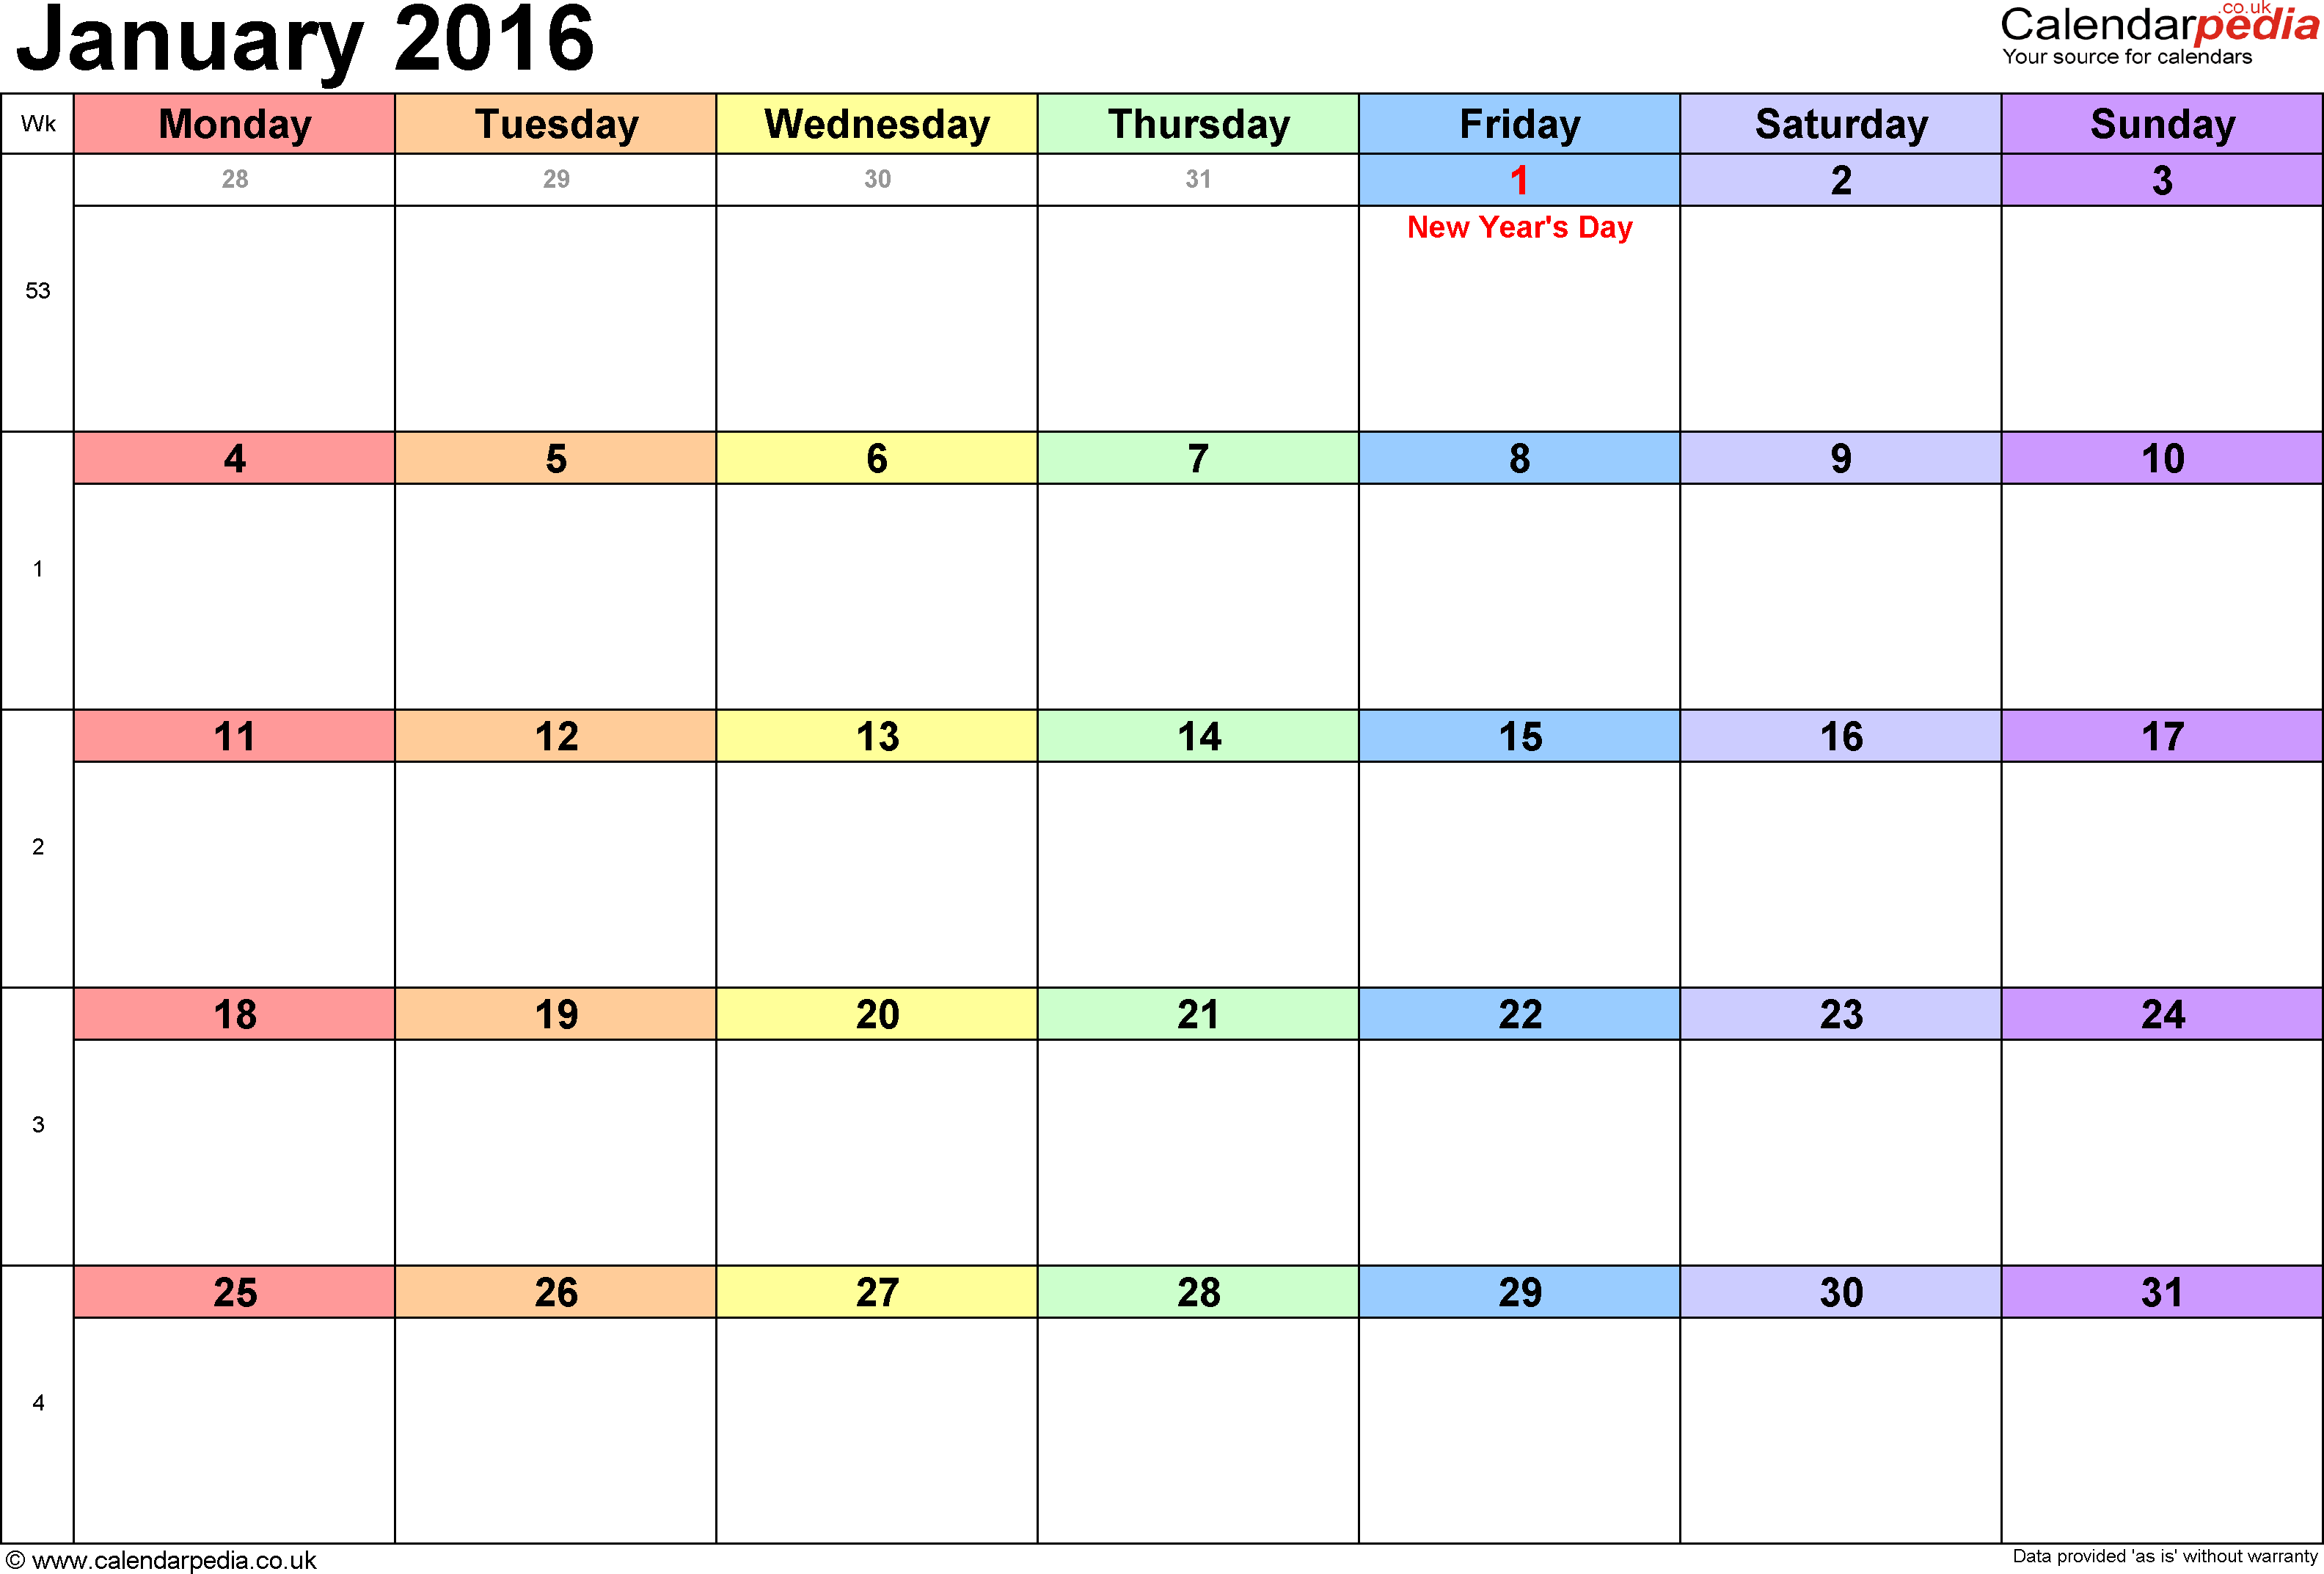 January 2016 Calendar Holidays